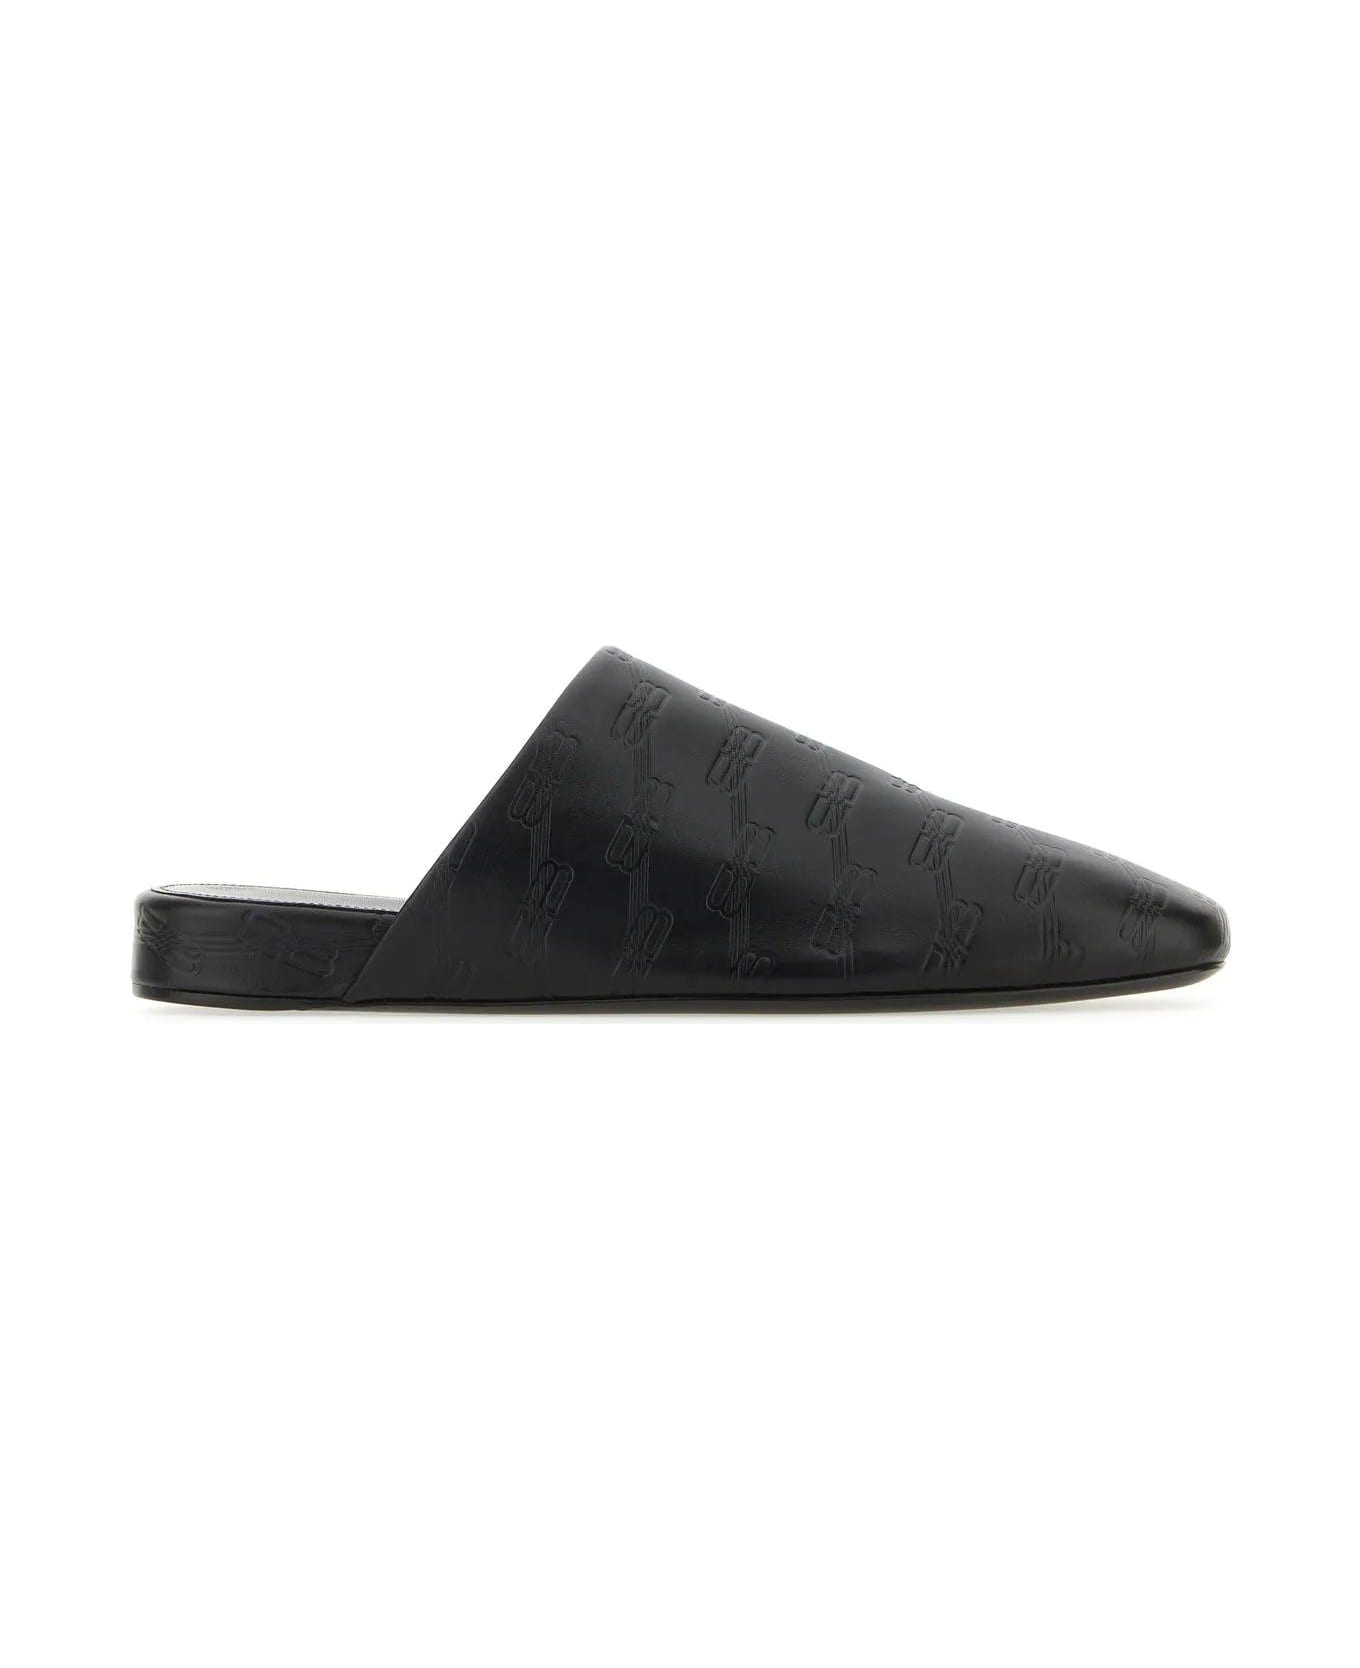 Balenciaga Black Leather Slippers - Nero